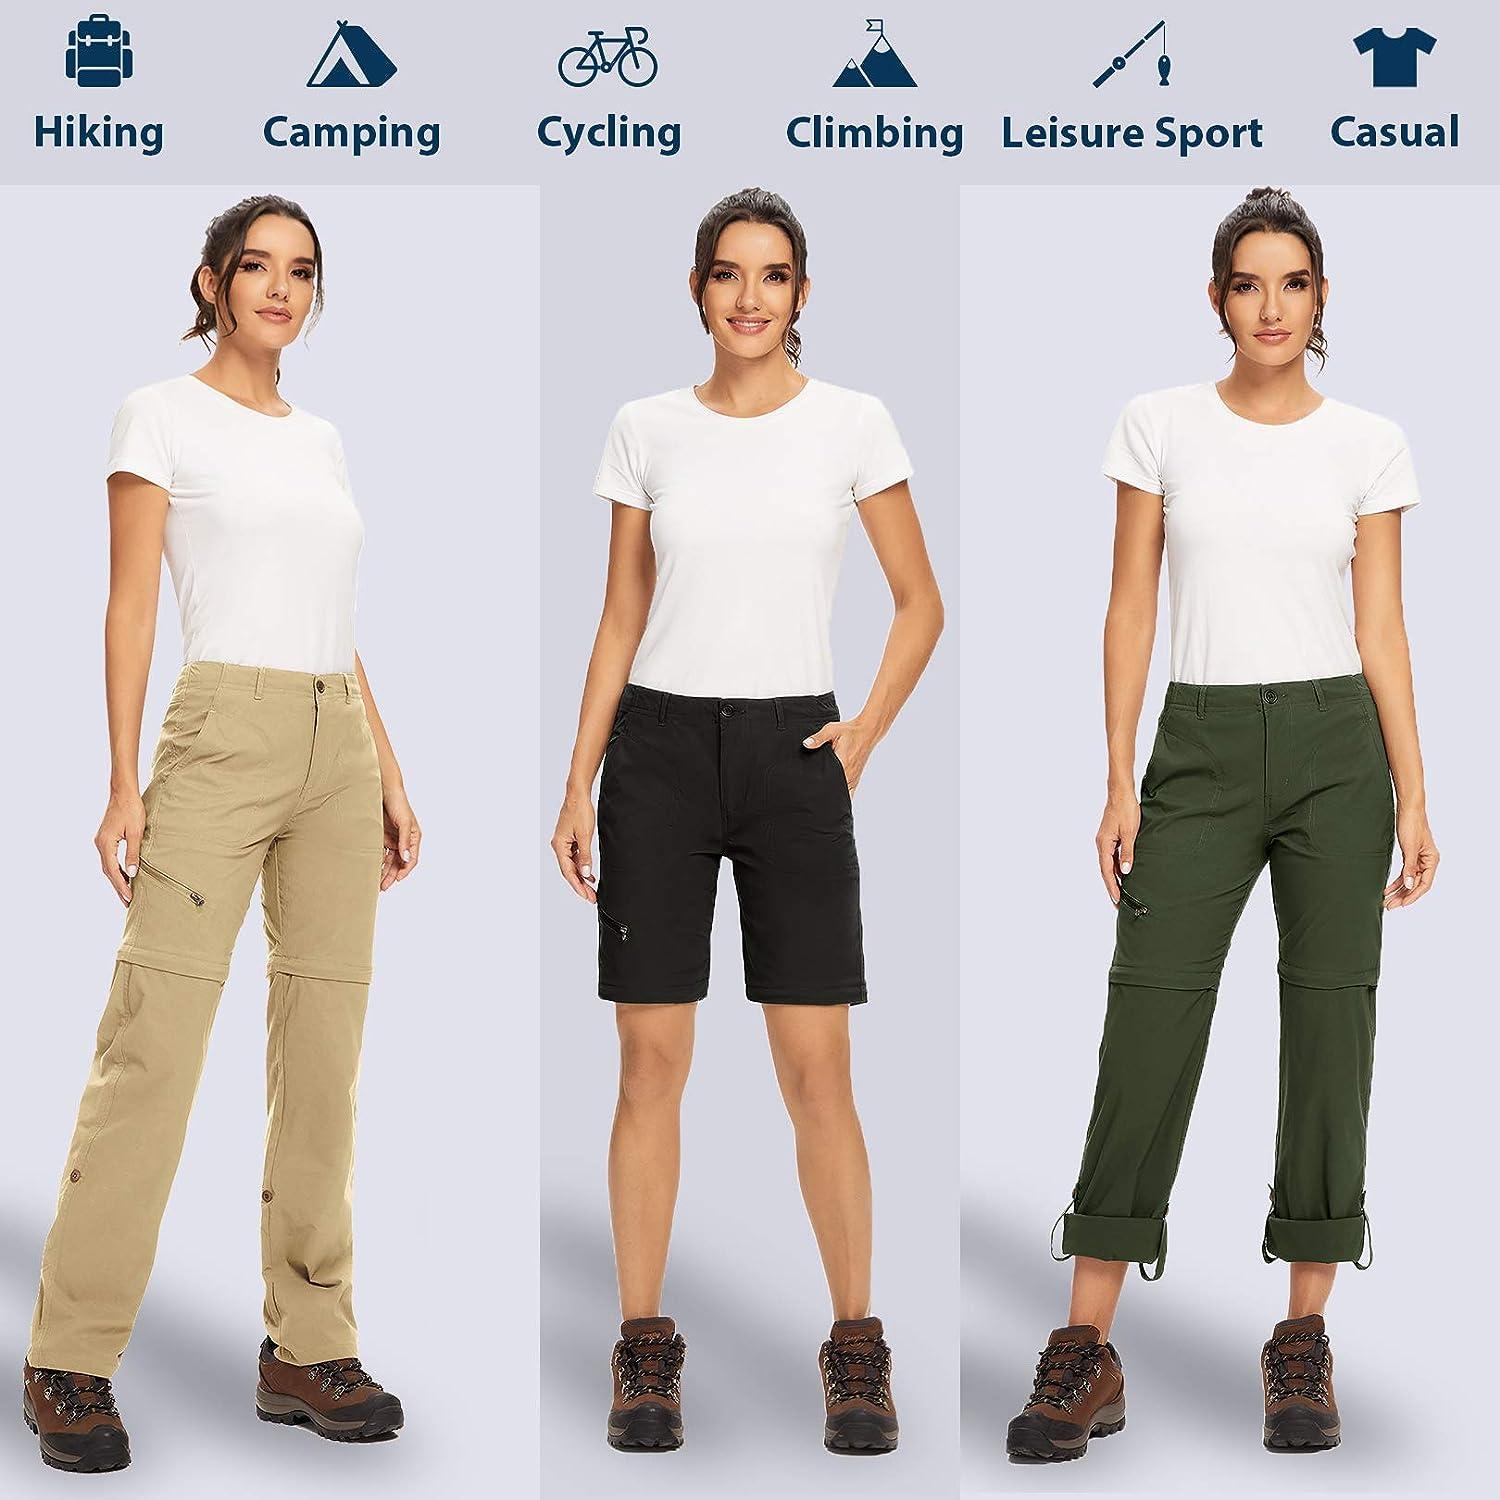 Women's Hiking Pants Convertible Quick Dry Lightweight Outdoor UPF